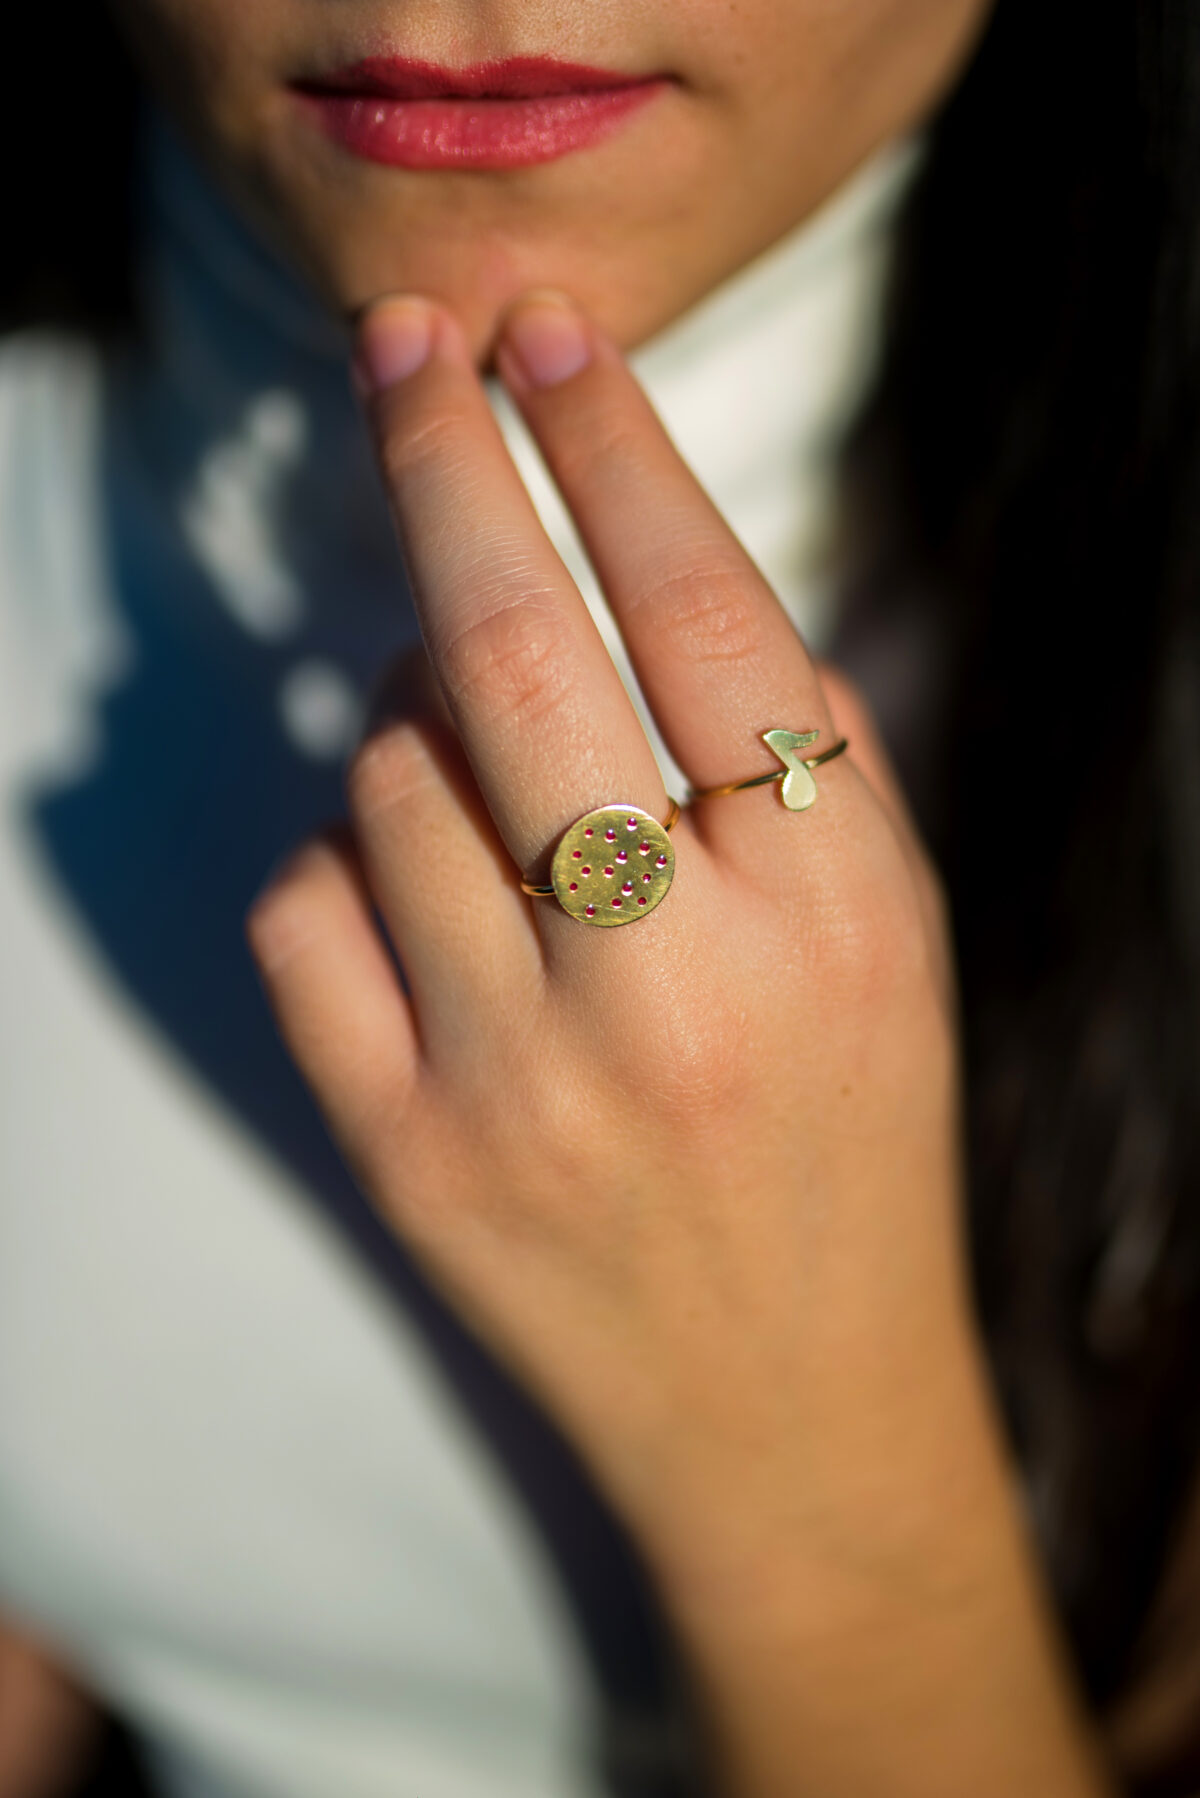 “Music” επίχρυσο δαχτυλίδι “Music” επίχρυσο δαχτυλίδι “Music” επίχρυσο δαχτυλίδι 6